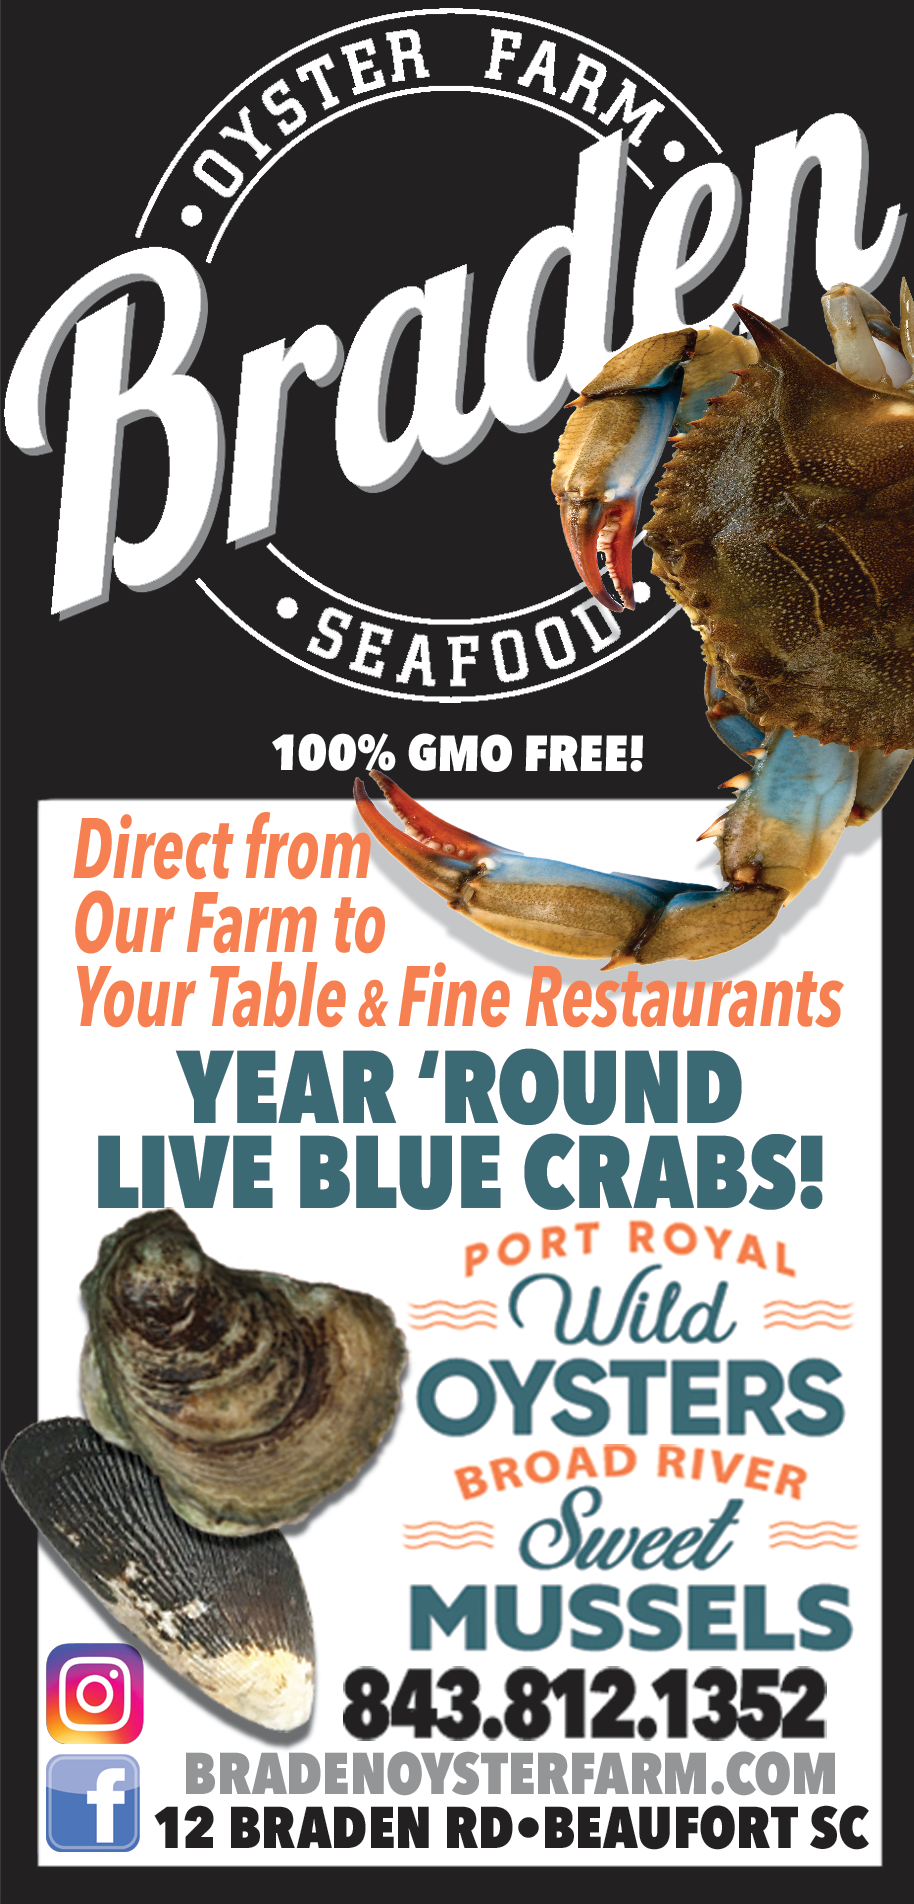 Braden's Seafood & Oyster Farm Print Ad